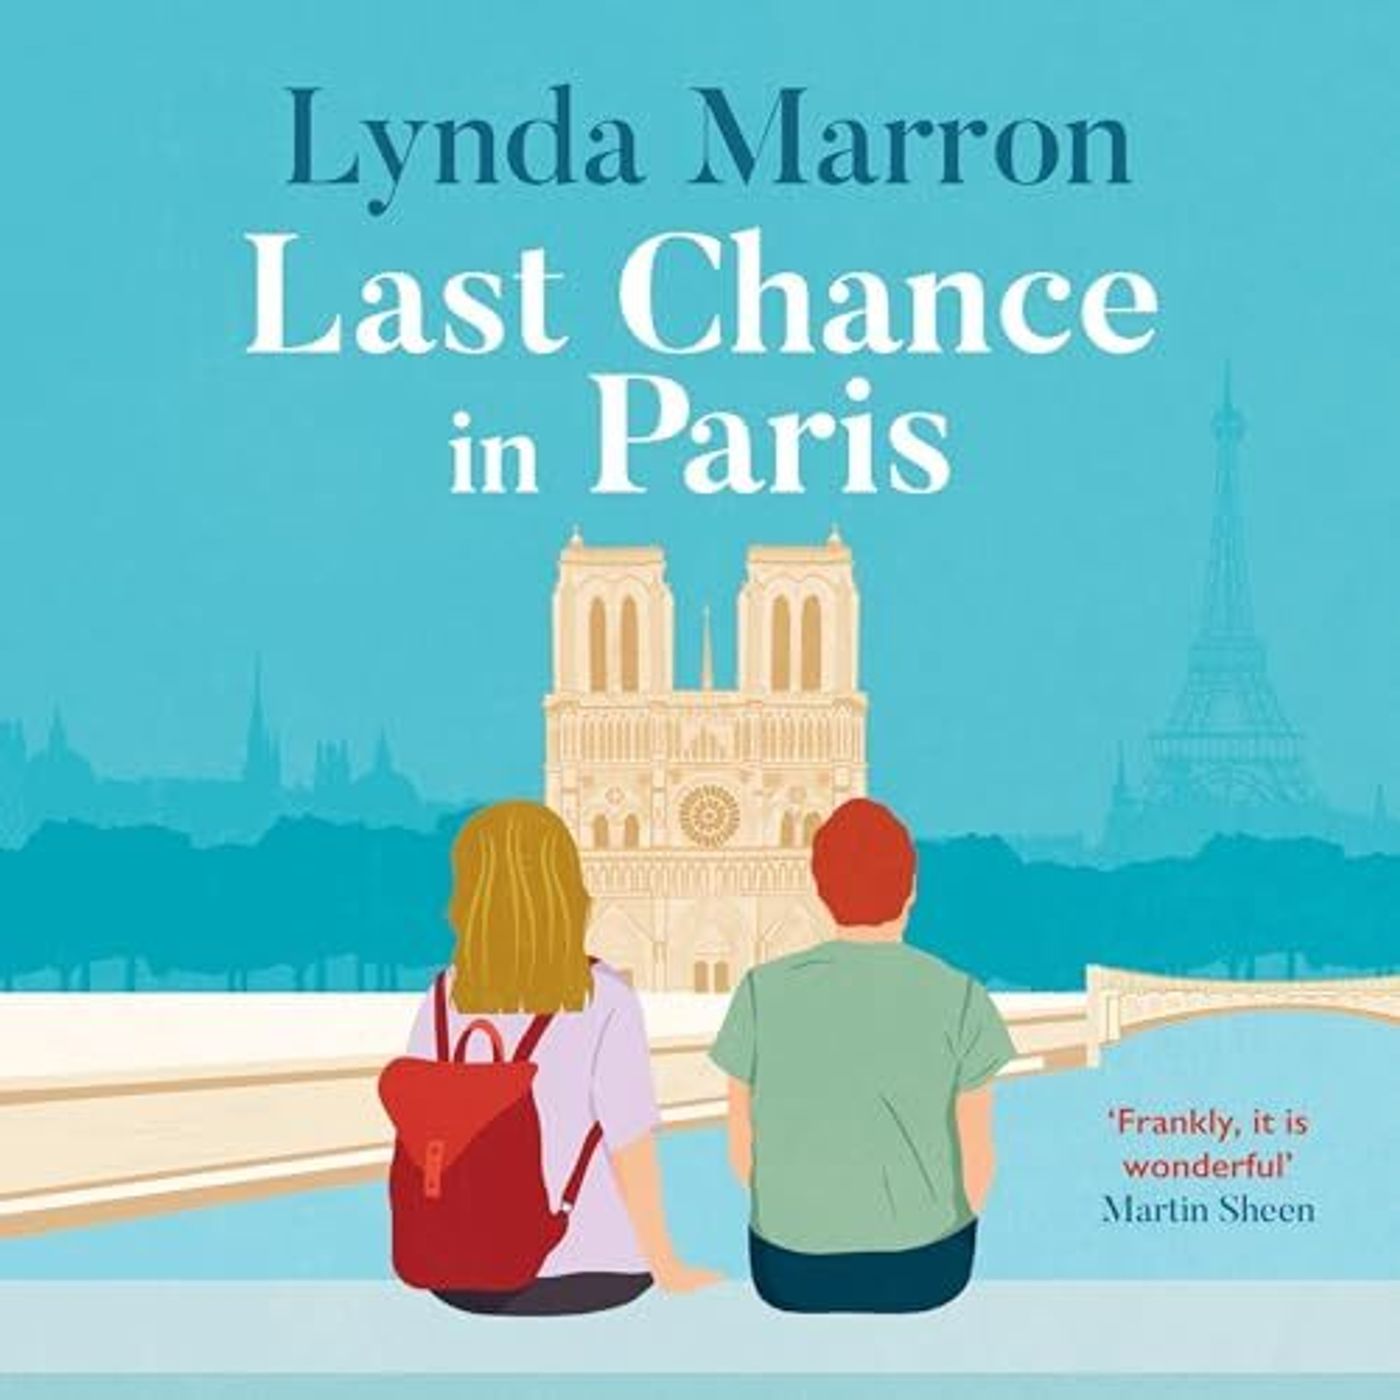 358: Lynda Marron - Last Chance in Paris